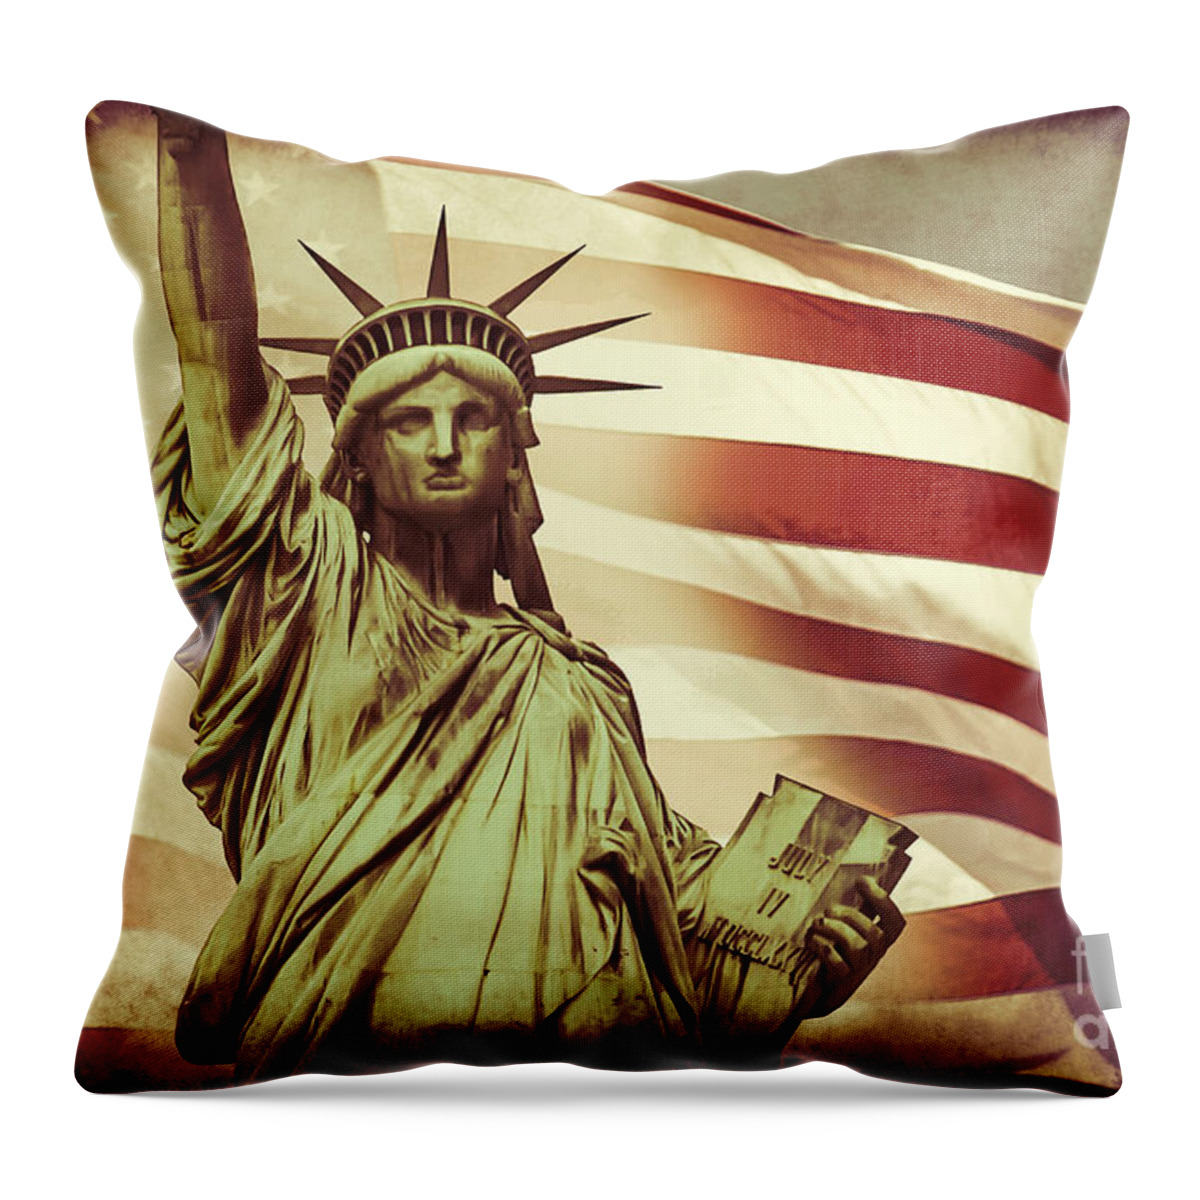 Statue Of Liberty Throw Pillow featuring the digital art Liberty by Az Jackson